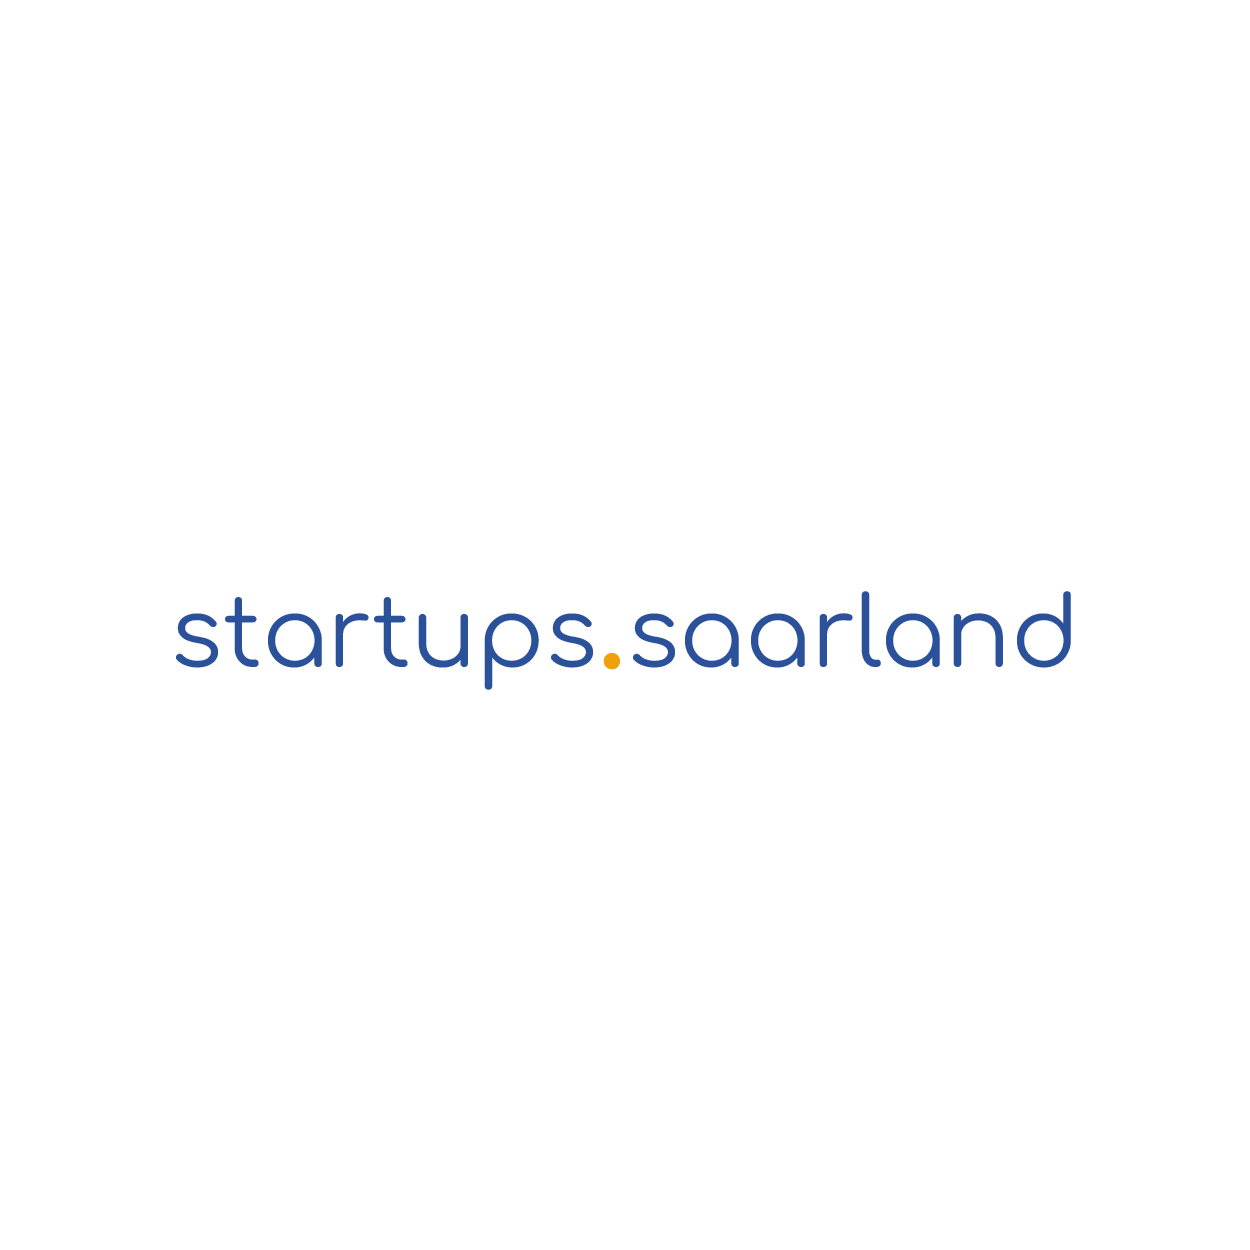 startups-saarland